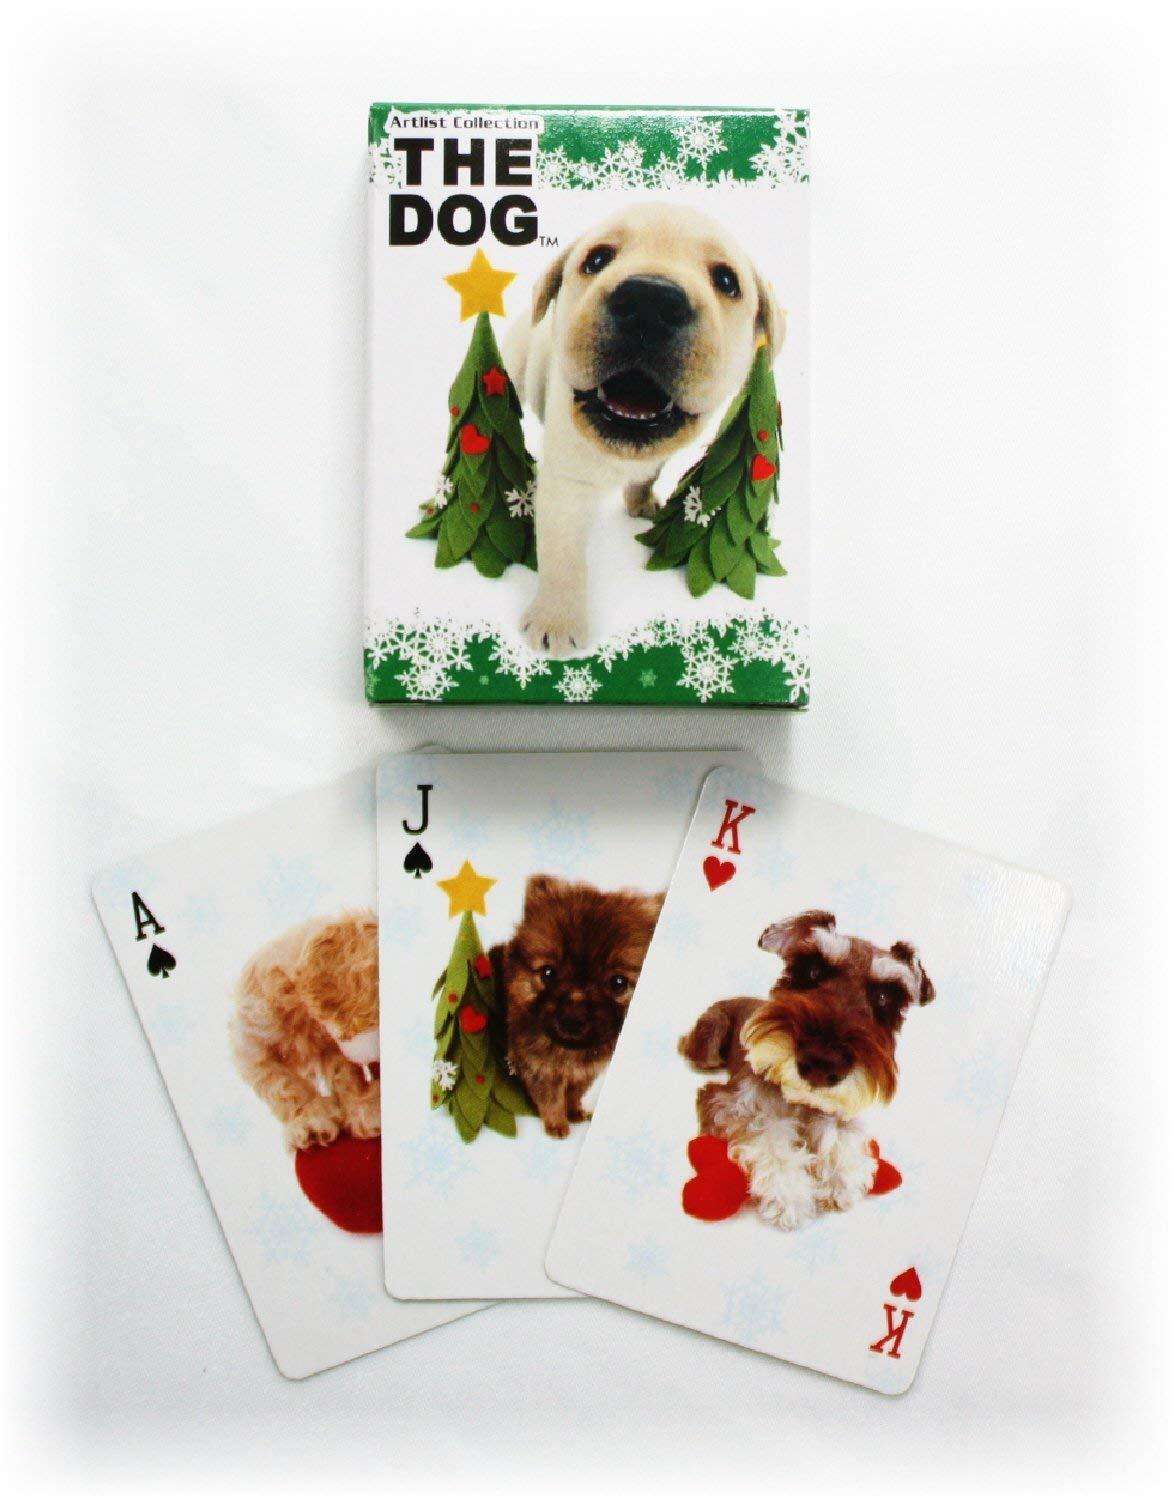 PlayingCardDecks.com-Hoyle Dog Santa 3 Deck Set Mini Holiday Playing Cards